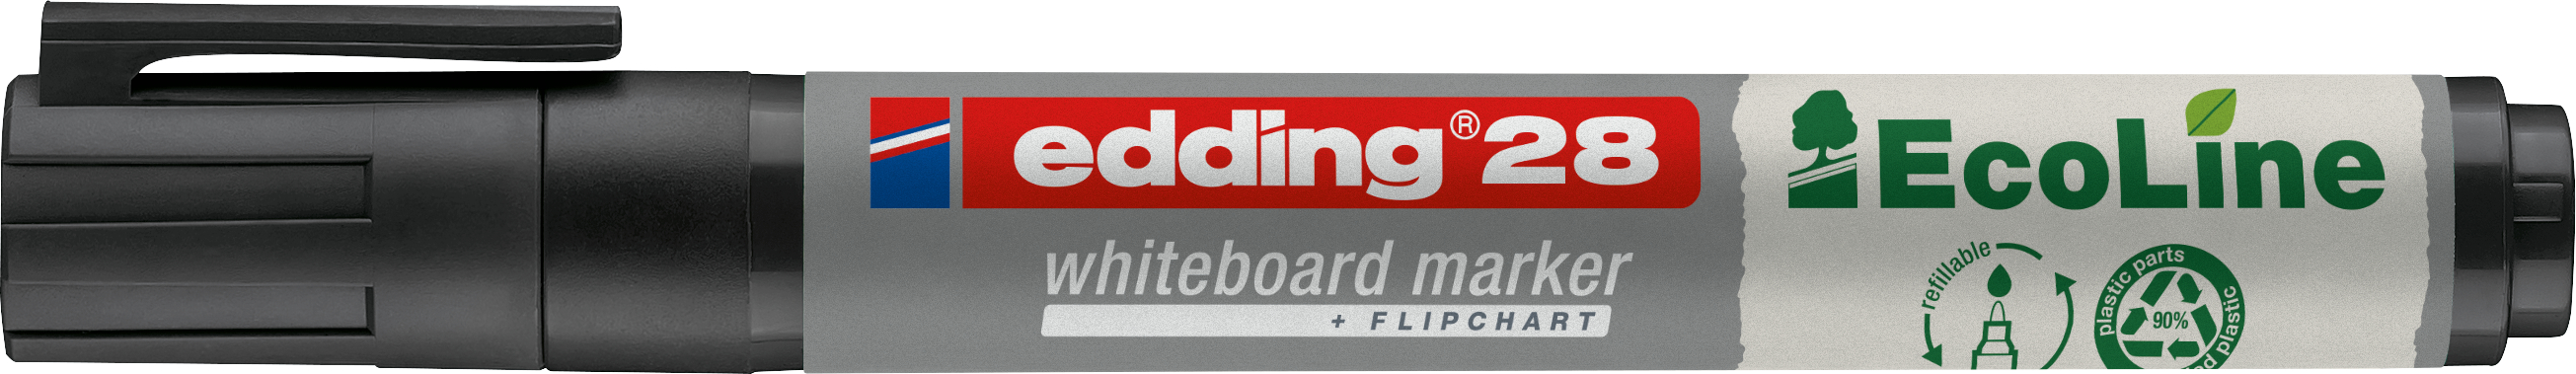 EDDING Boardmarker 28 EcoLine 1.5-3mm 28-1 noir noir